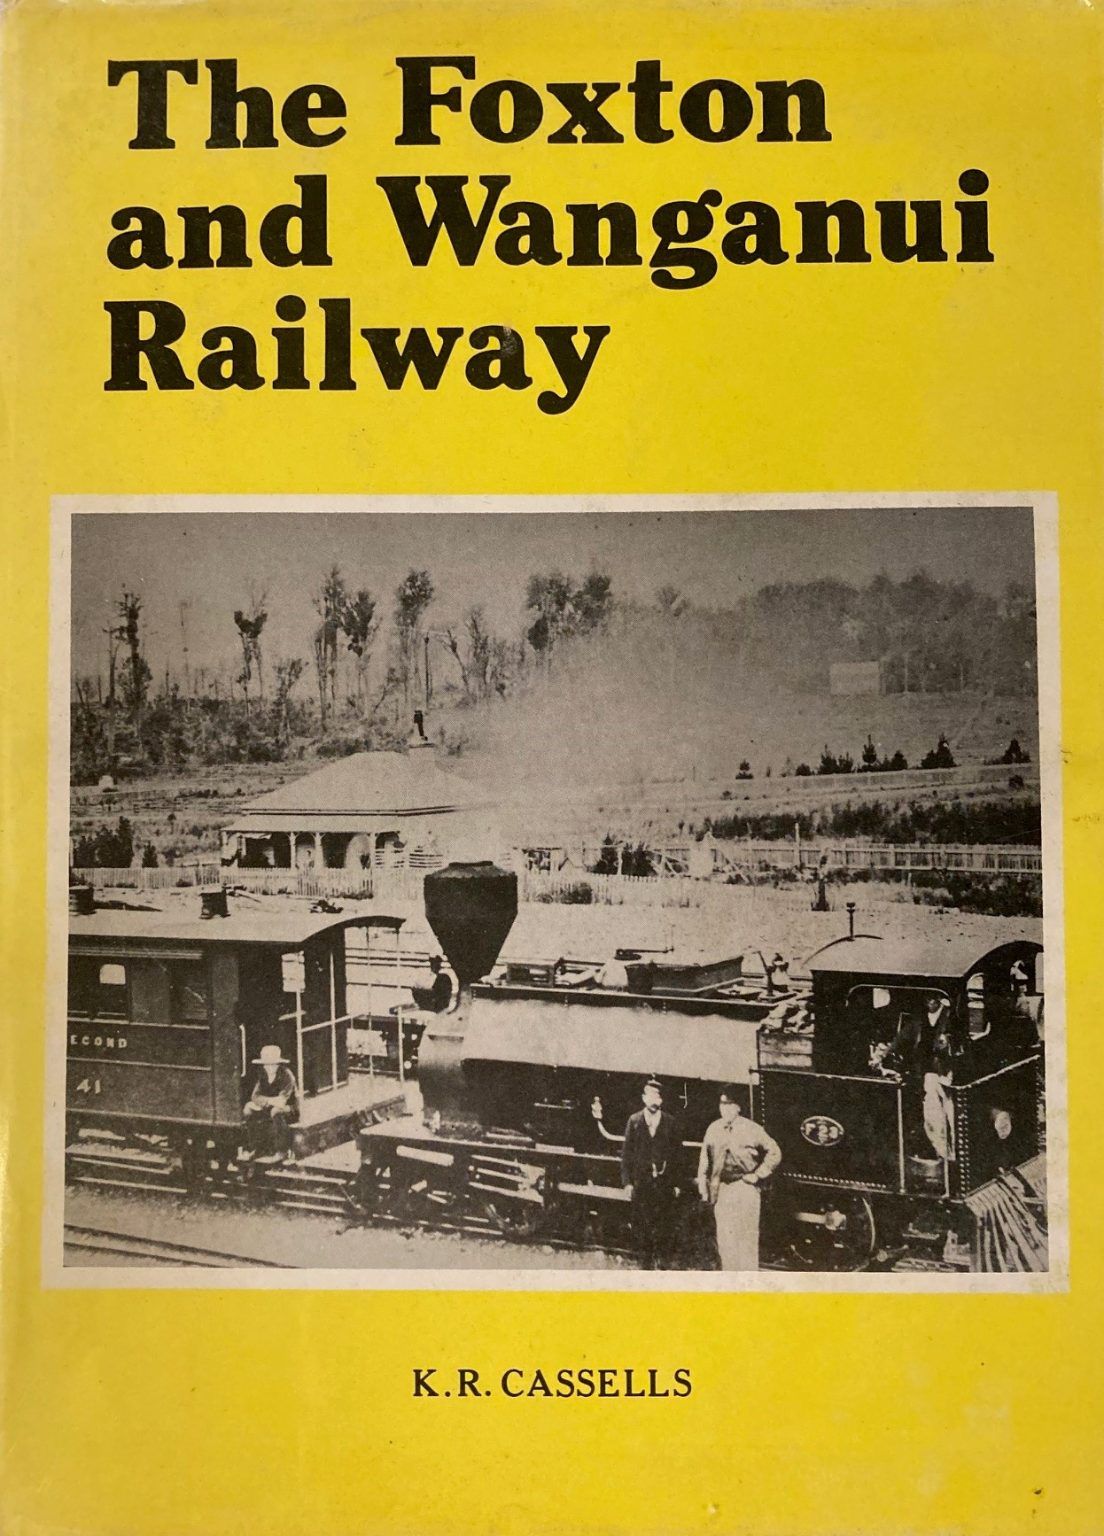 THE FOXTON AND WANGANUI RAILWAY